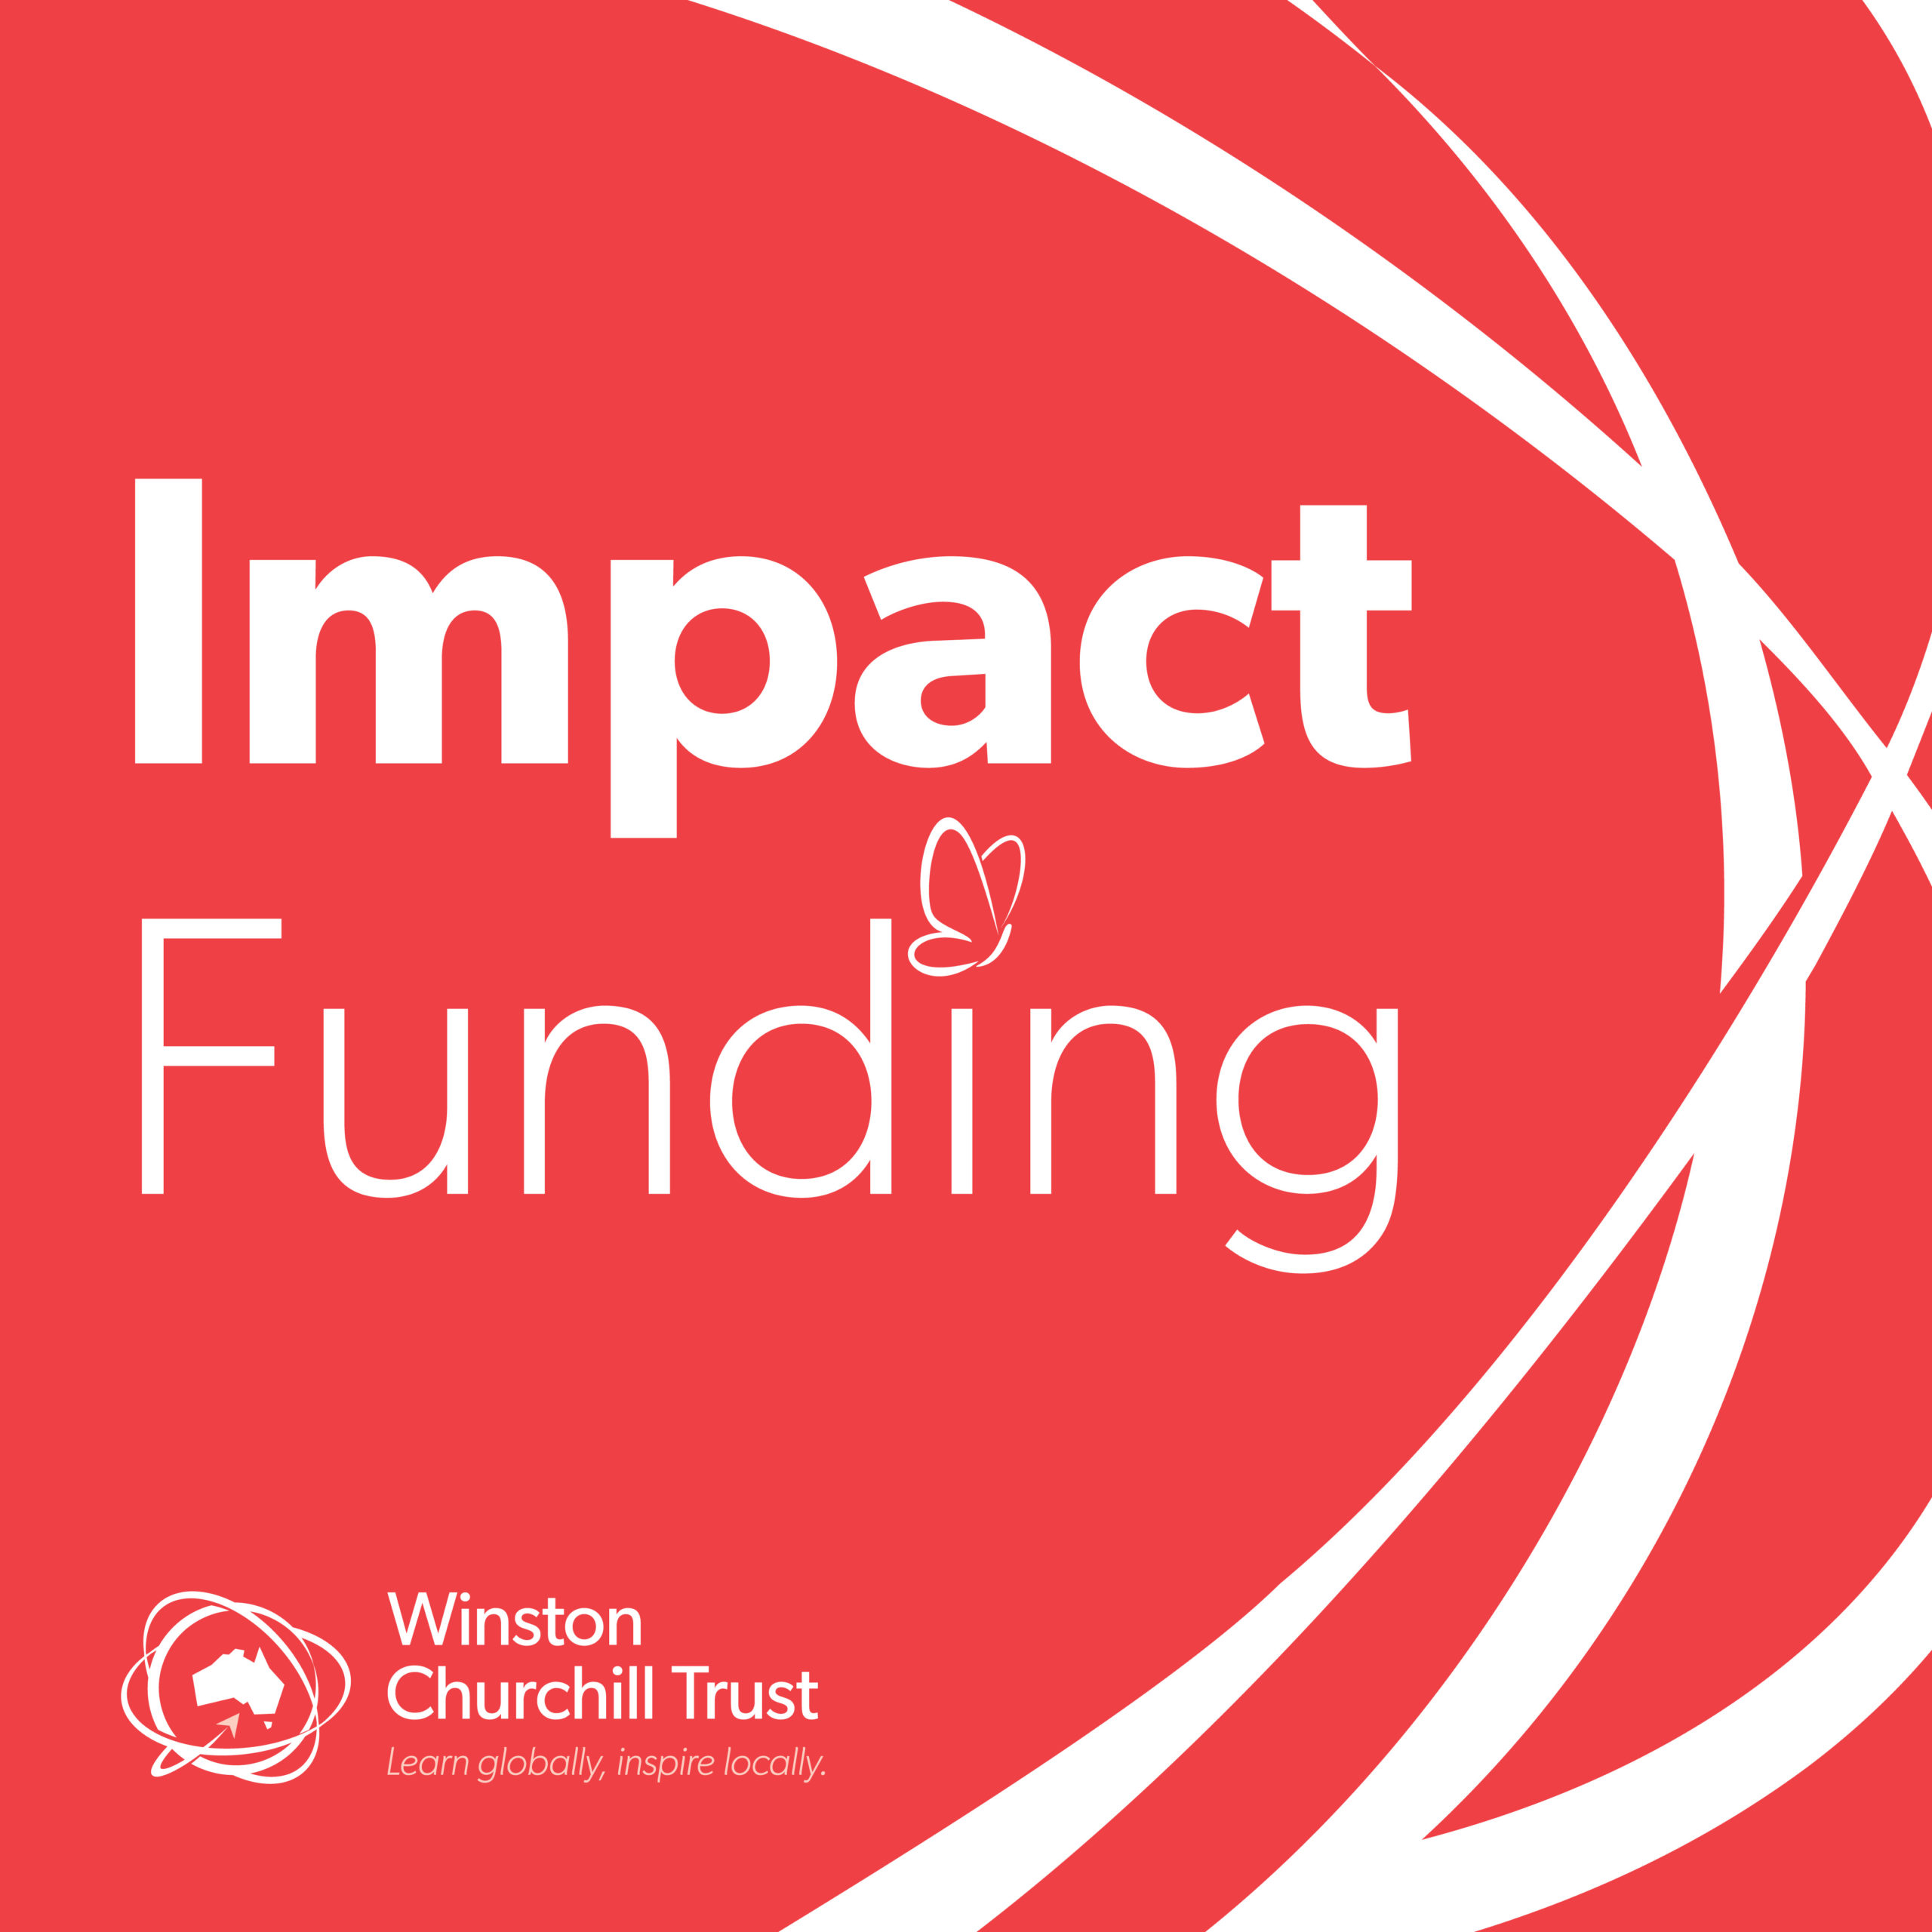 Fellow Impact Funding